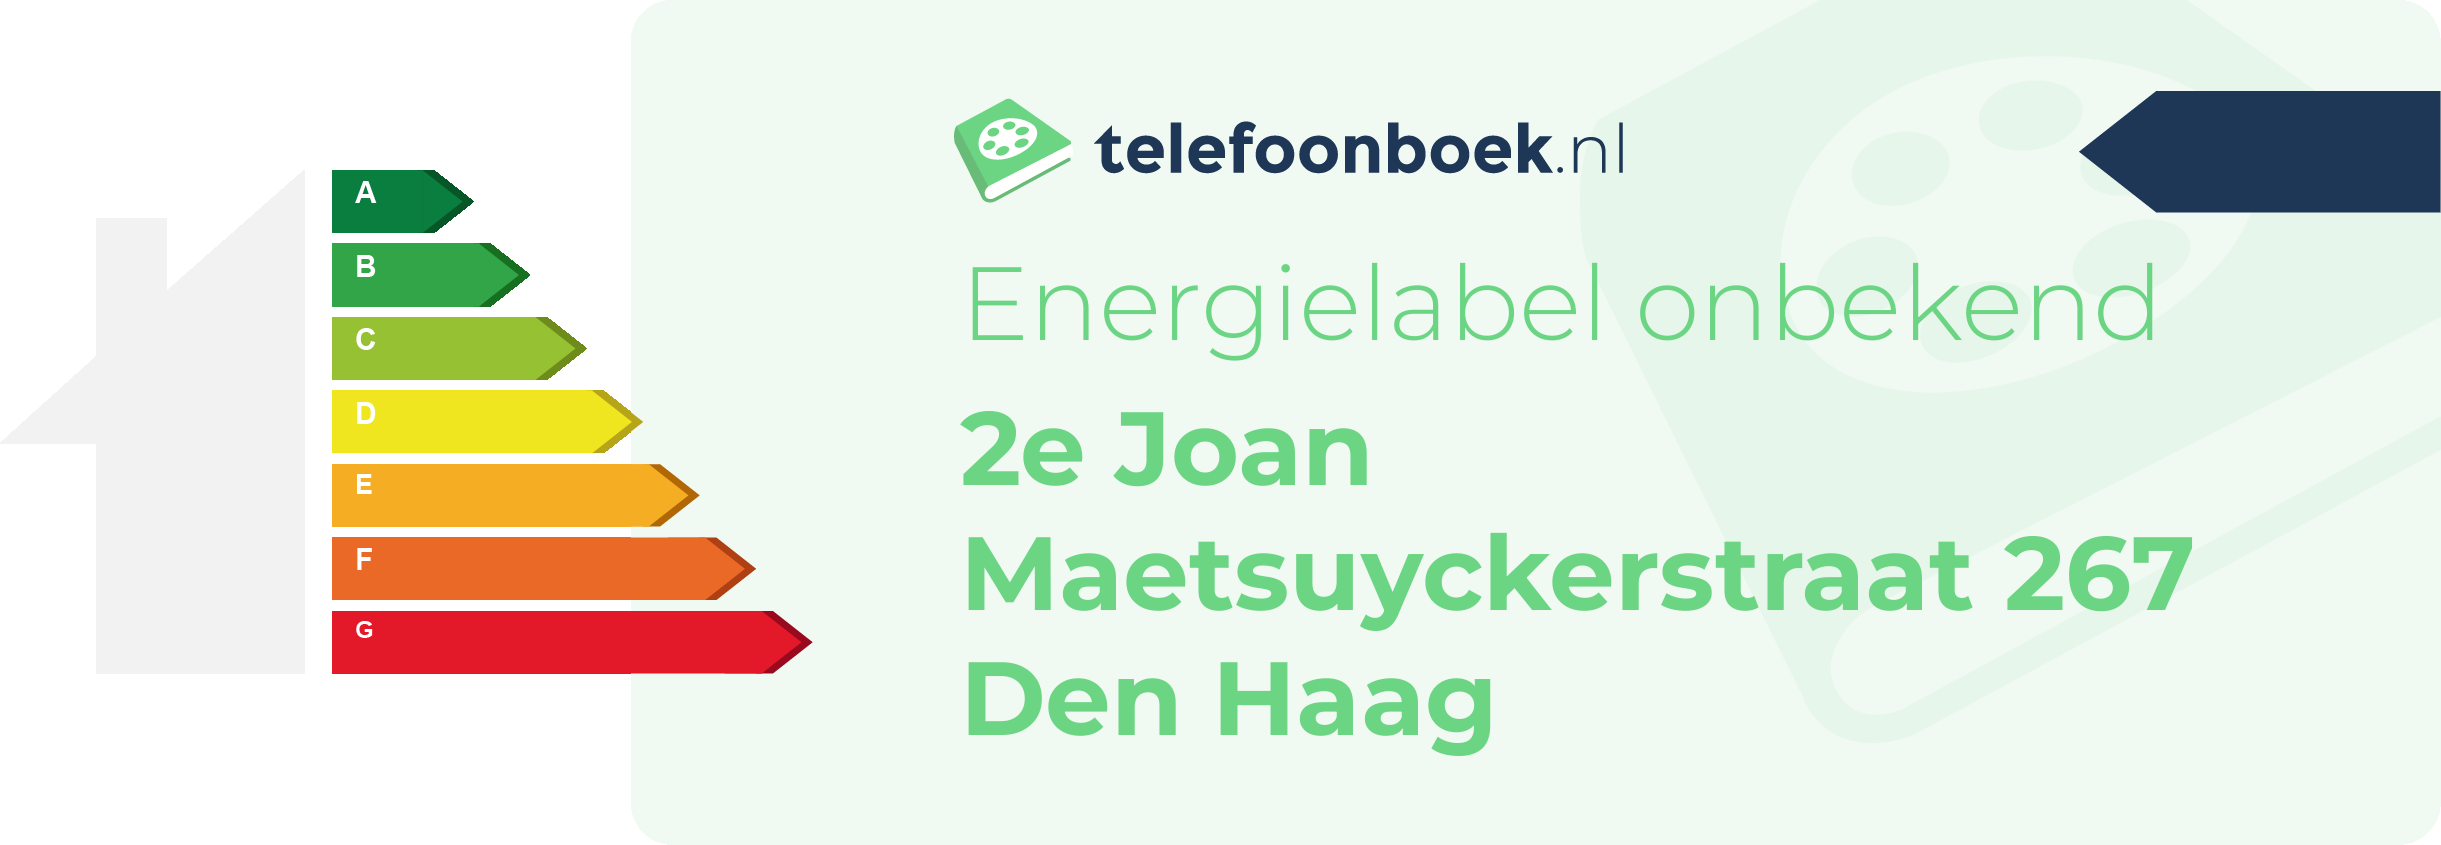 Energielabel 2e Joan Maetsuyckerstraat 267 Den Haag